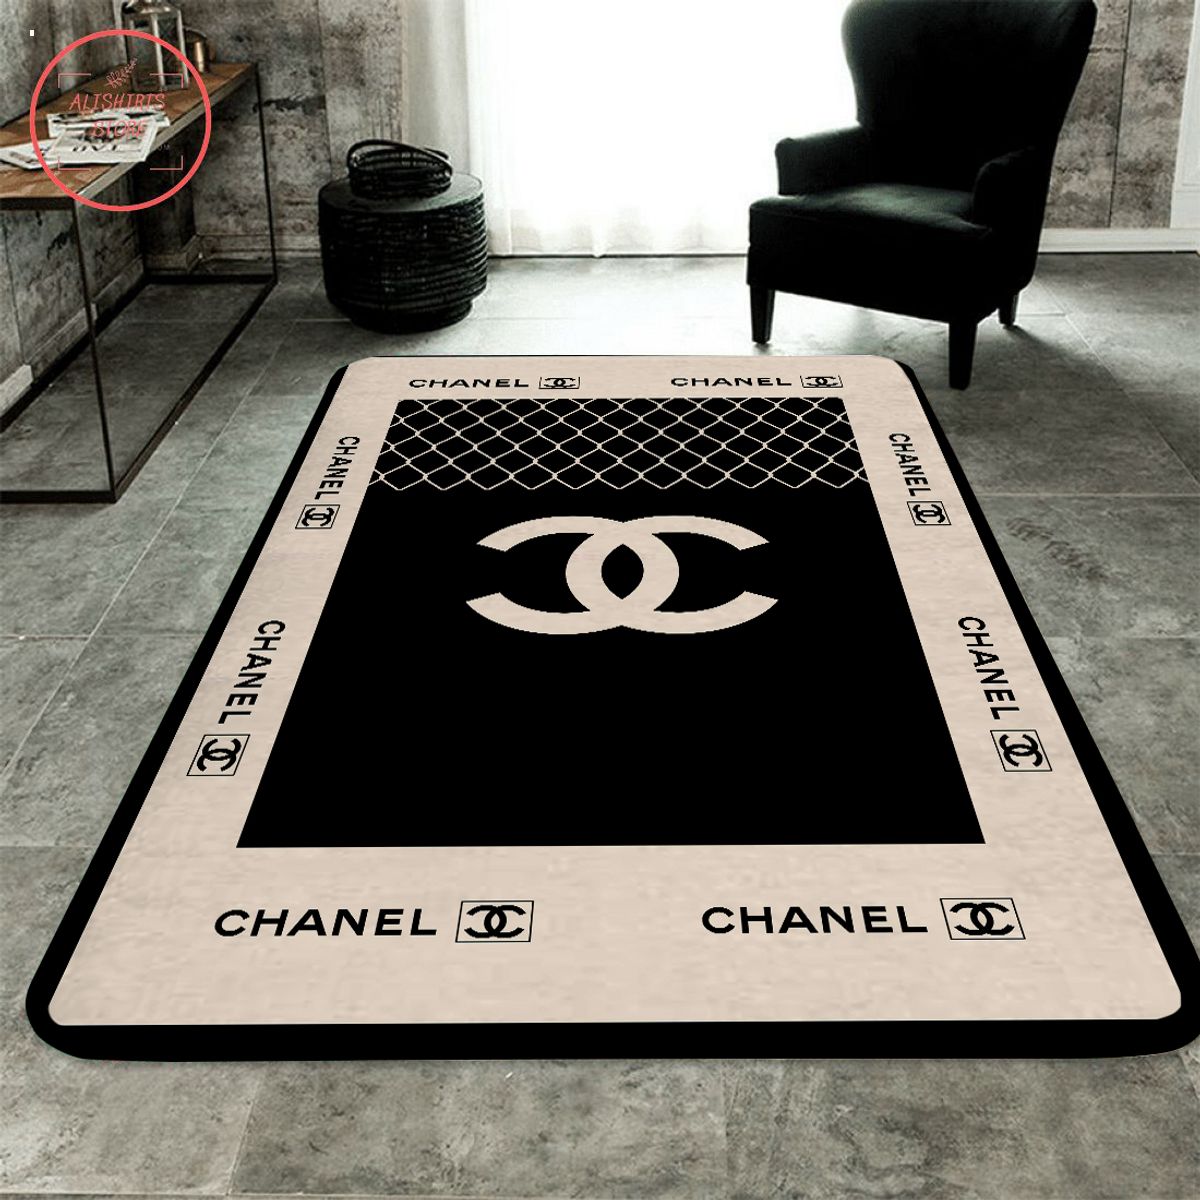 Chanel Beige Mix Black Luxury Brand Carpet Rug Limited Edition